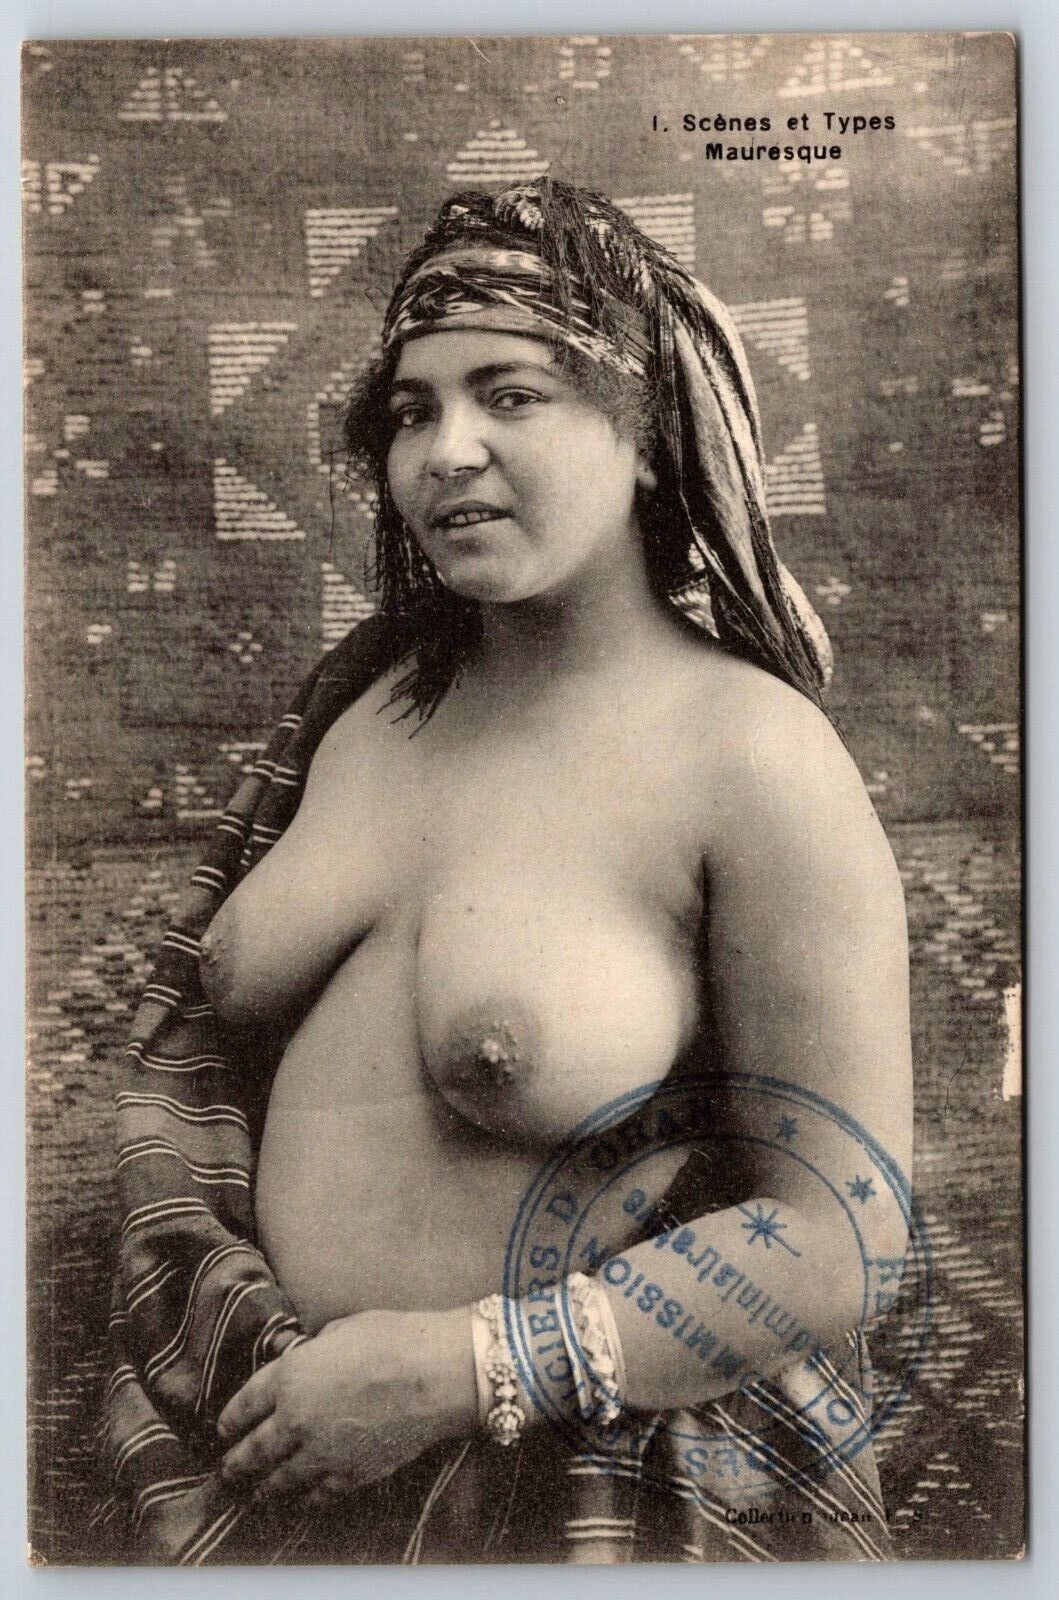 Scenes Mauresque Nude Moorish Woman Vintage Ethnic Postcard French Algeria